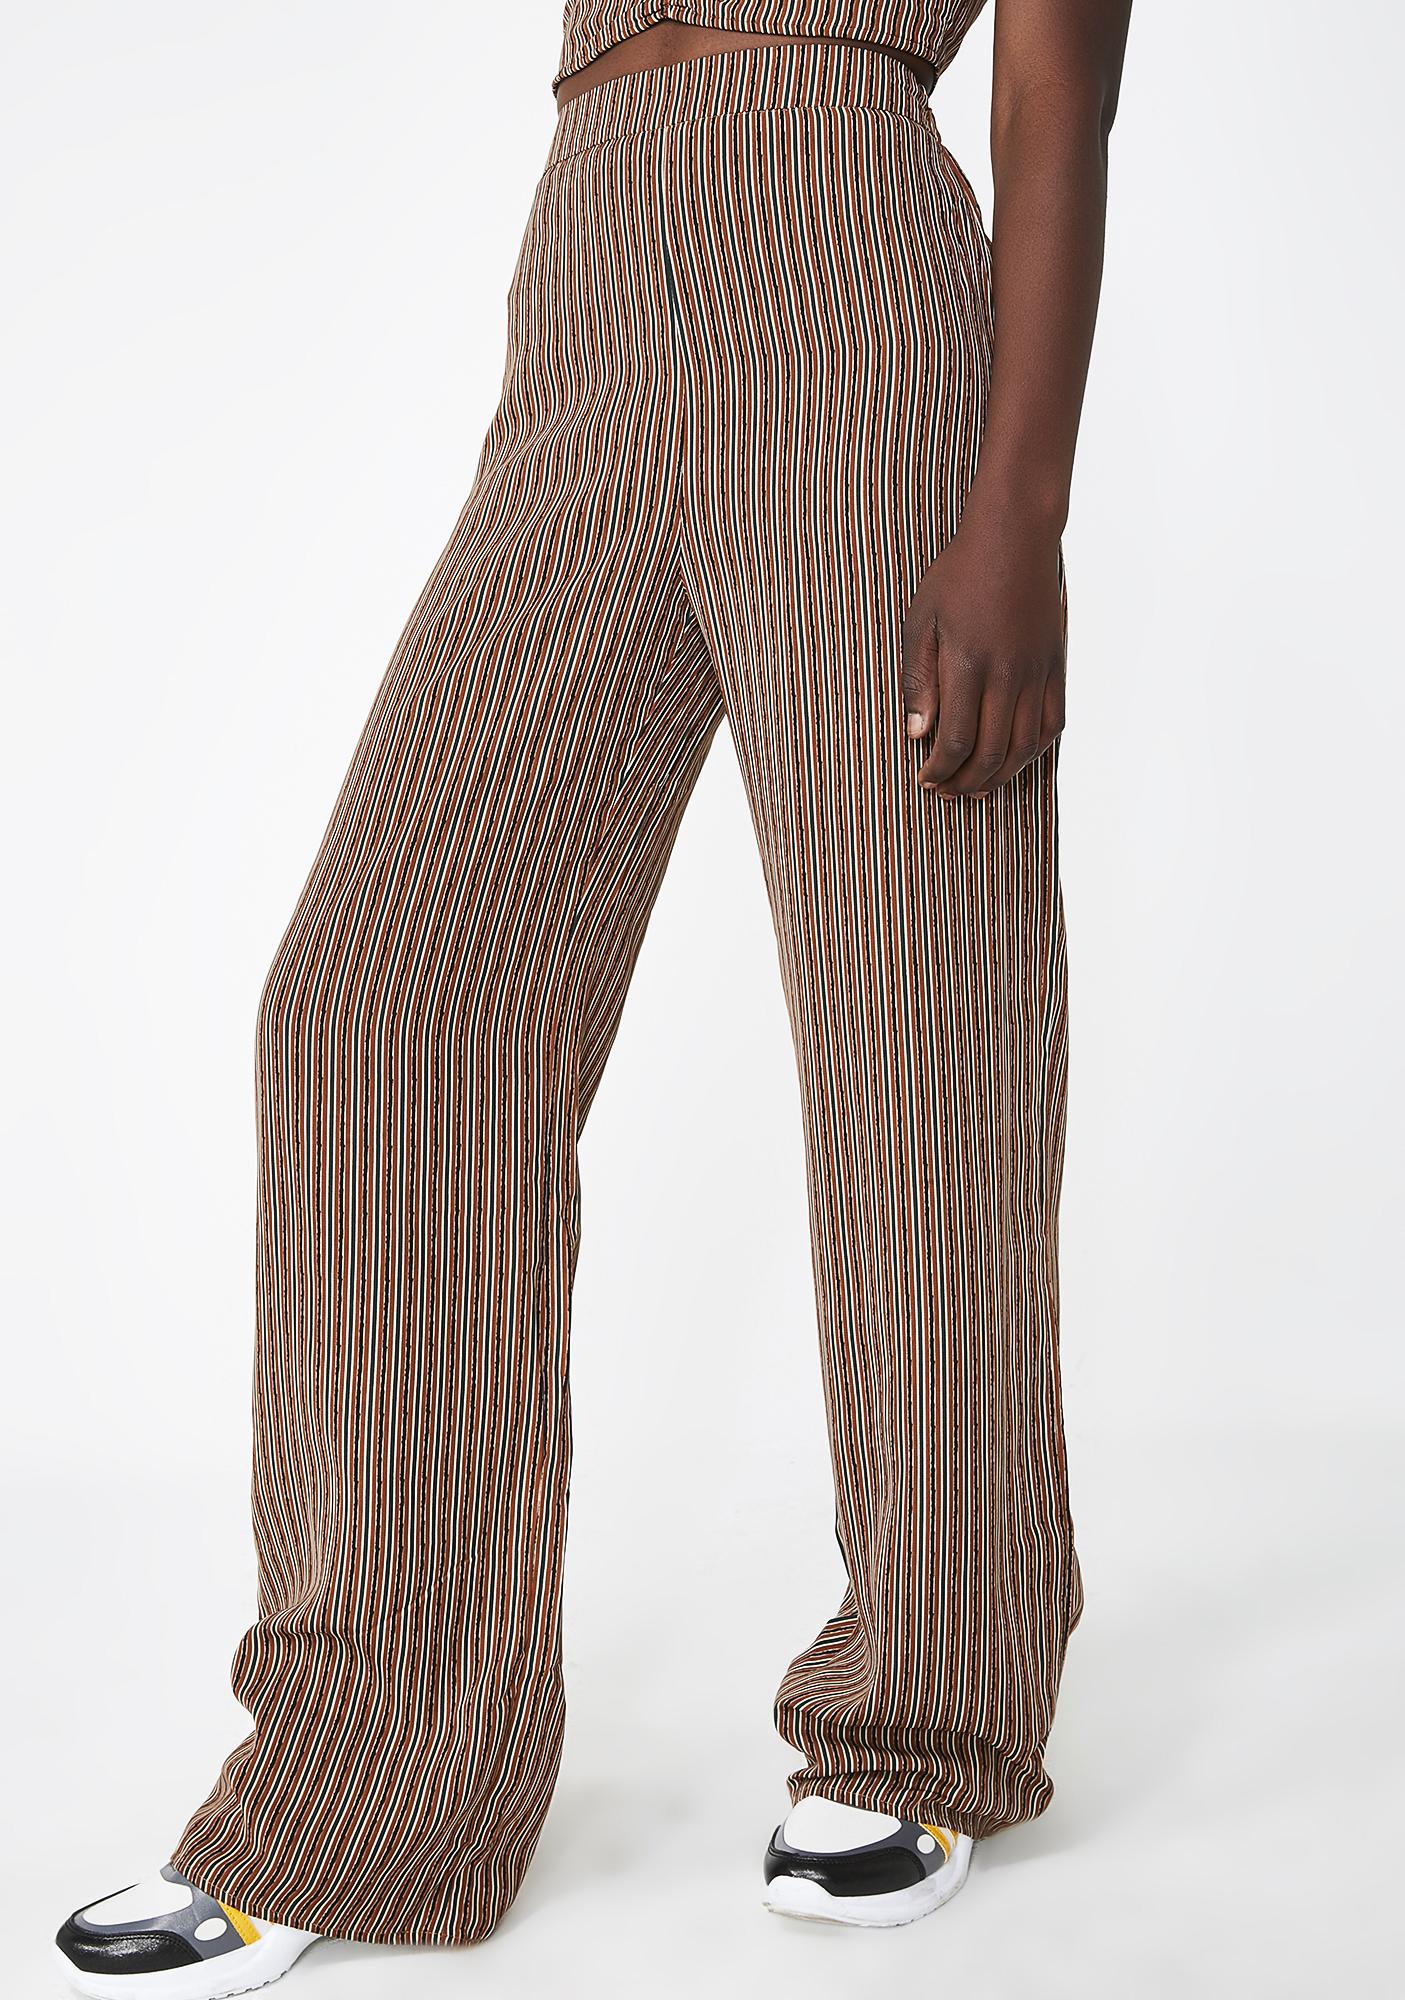 baggy striped pants